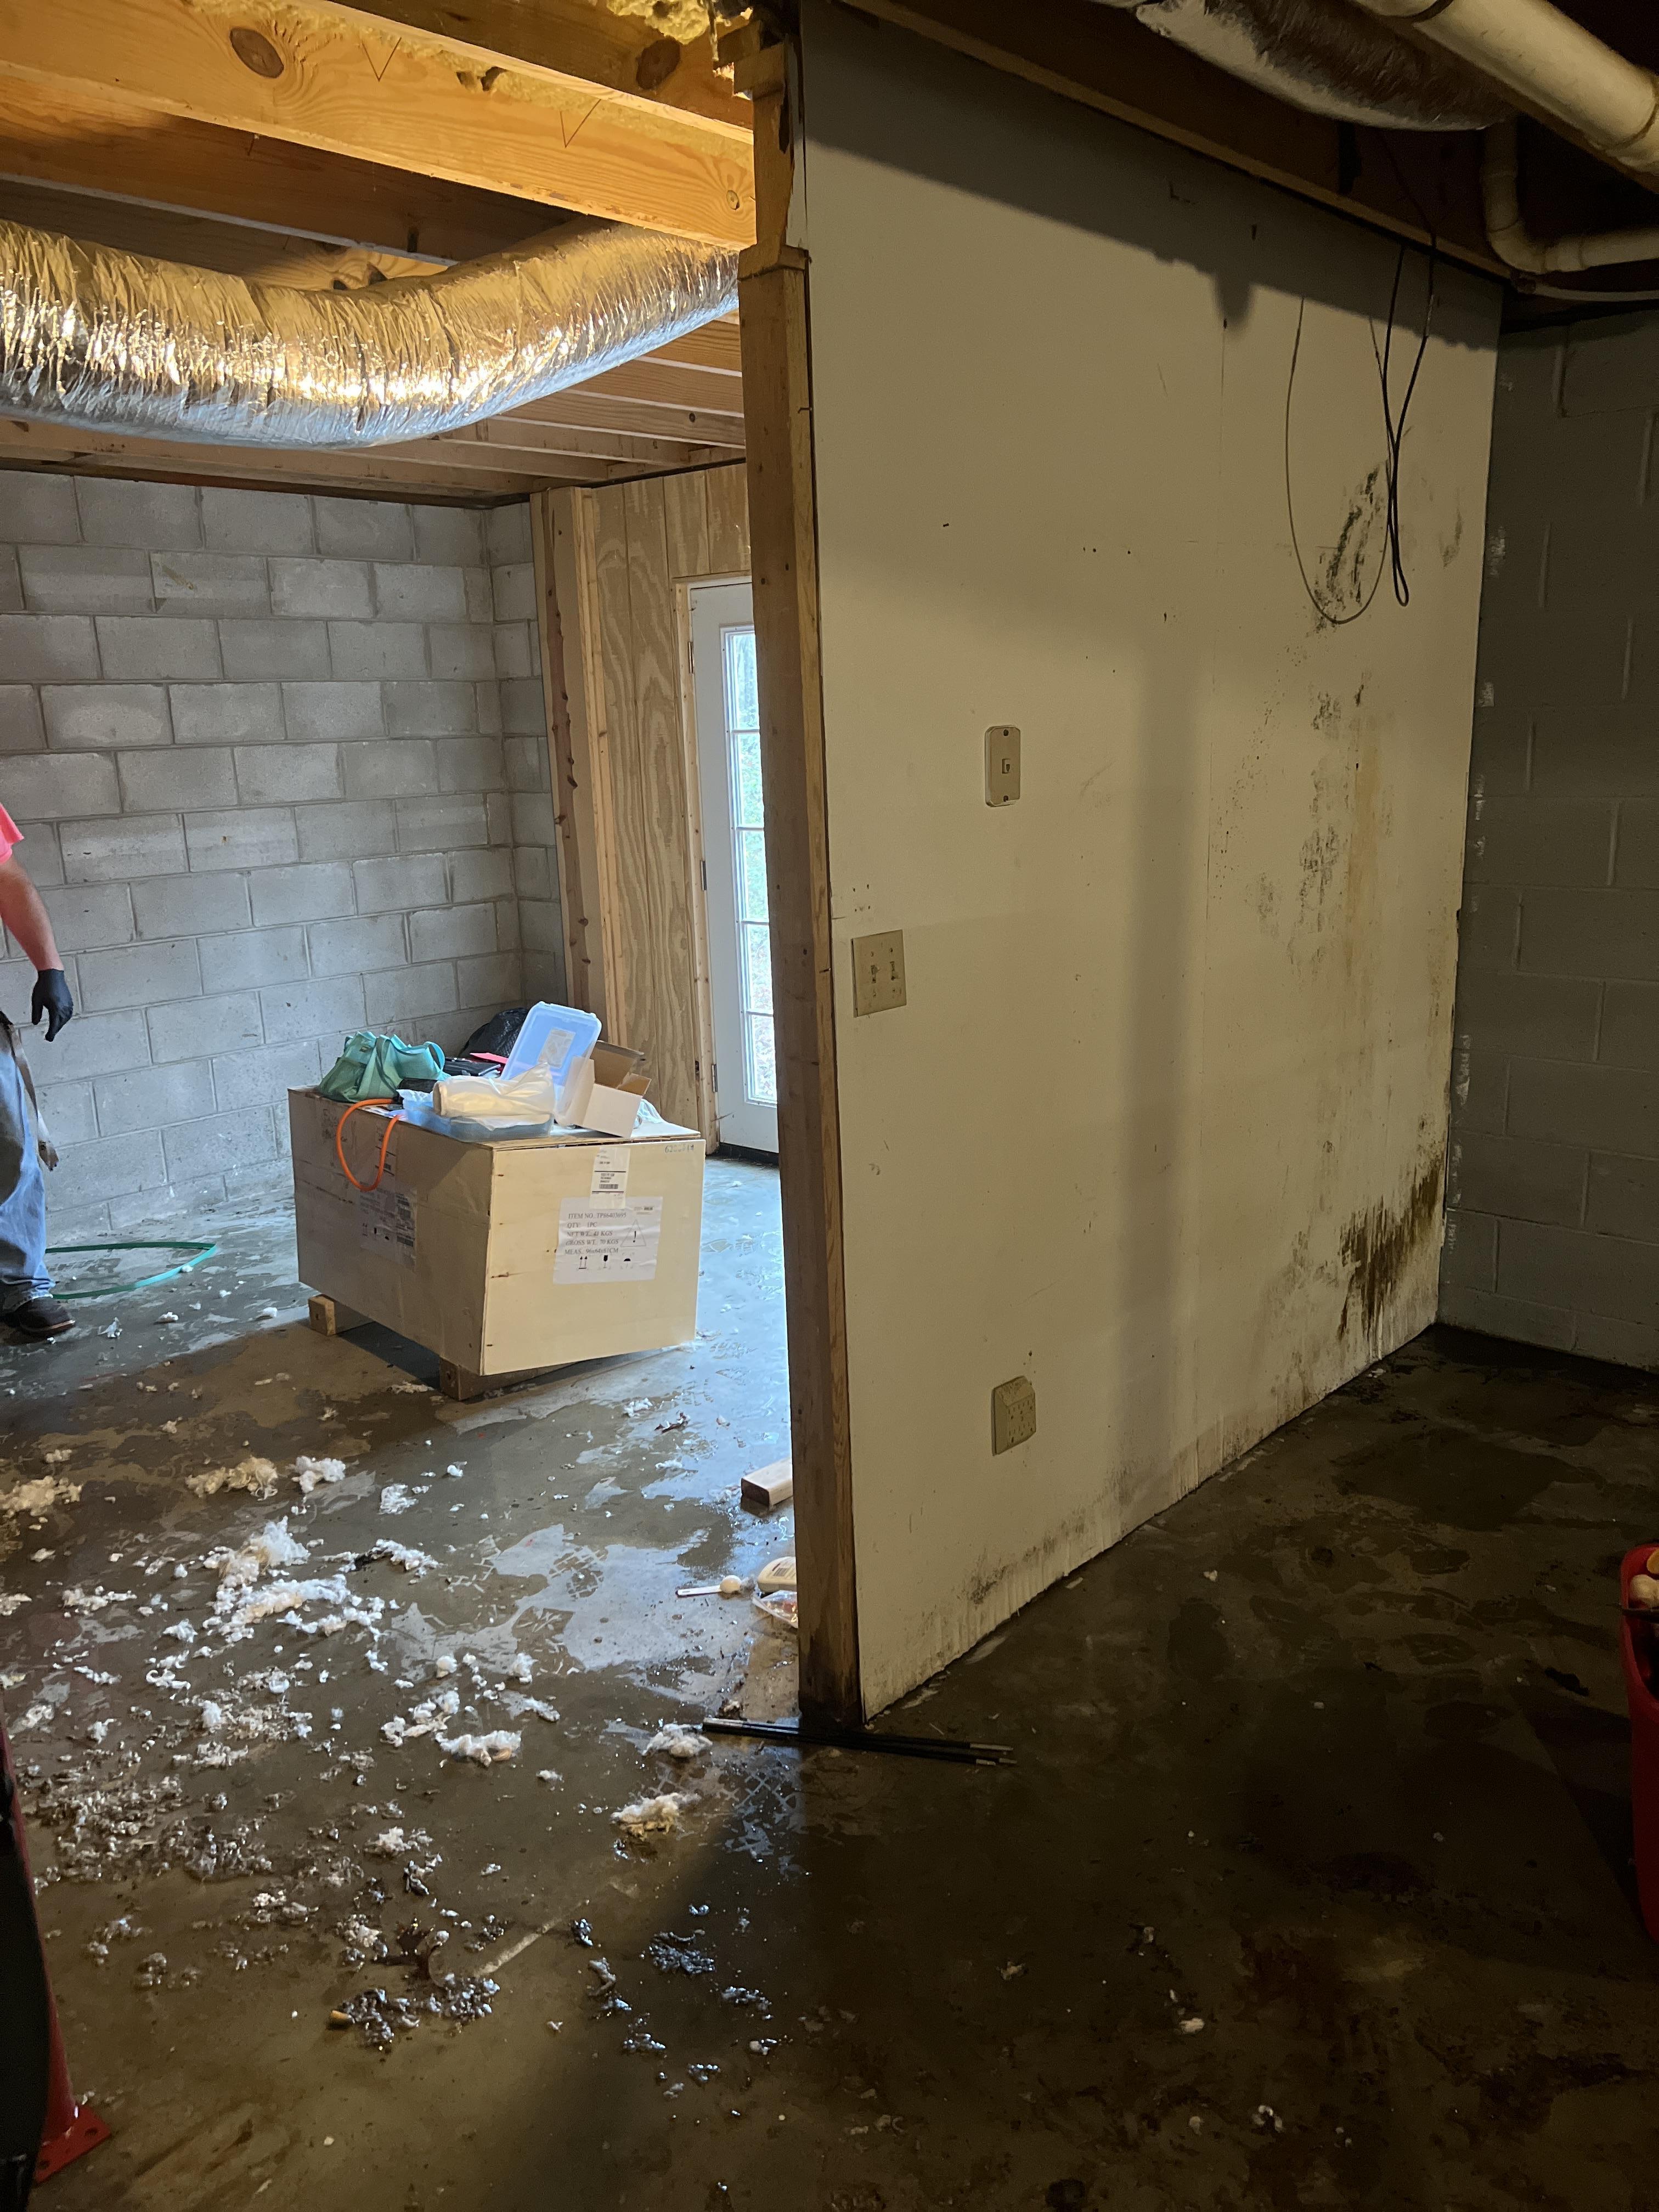 Water and debris in basement